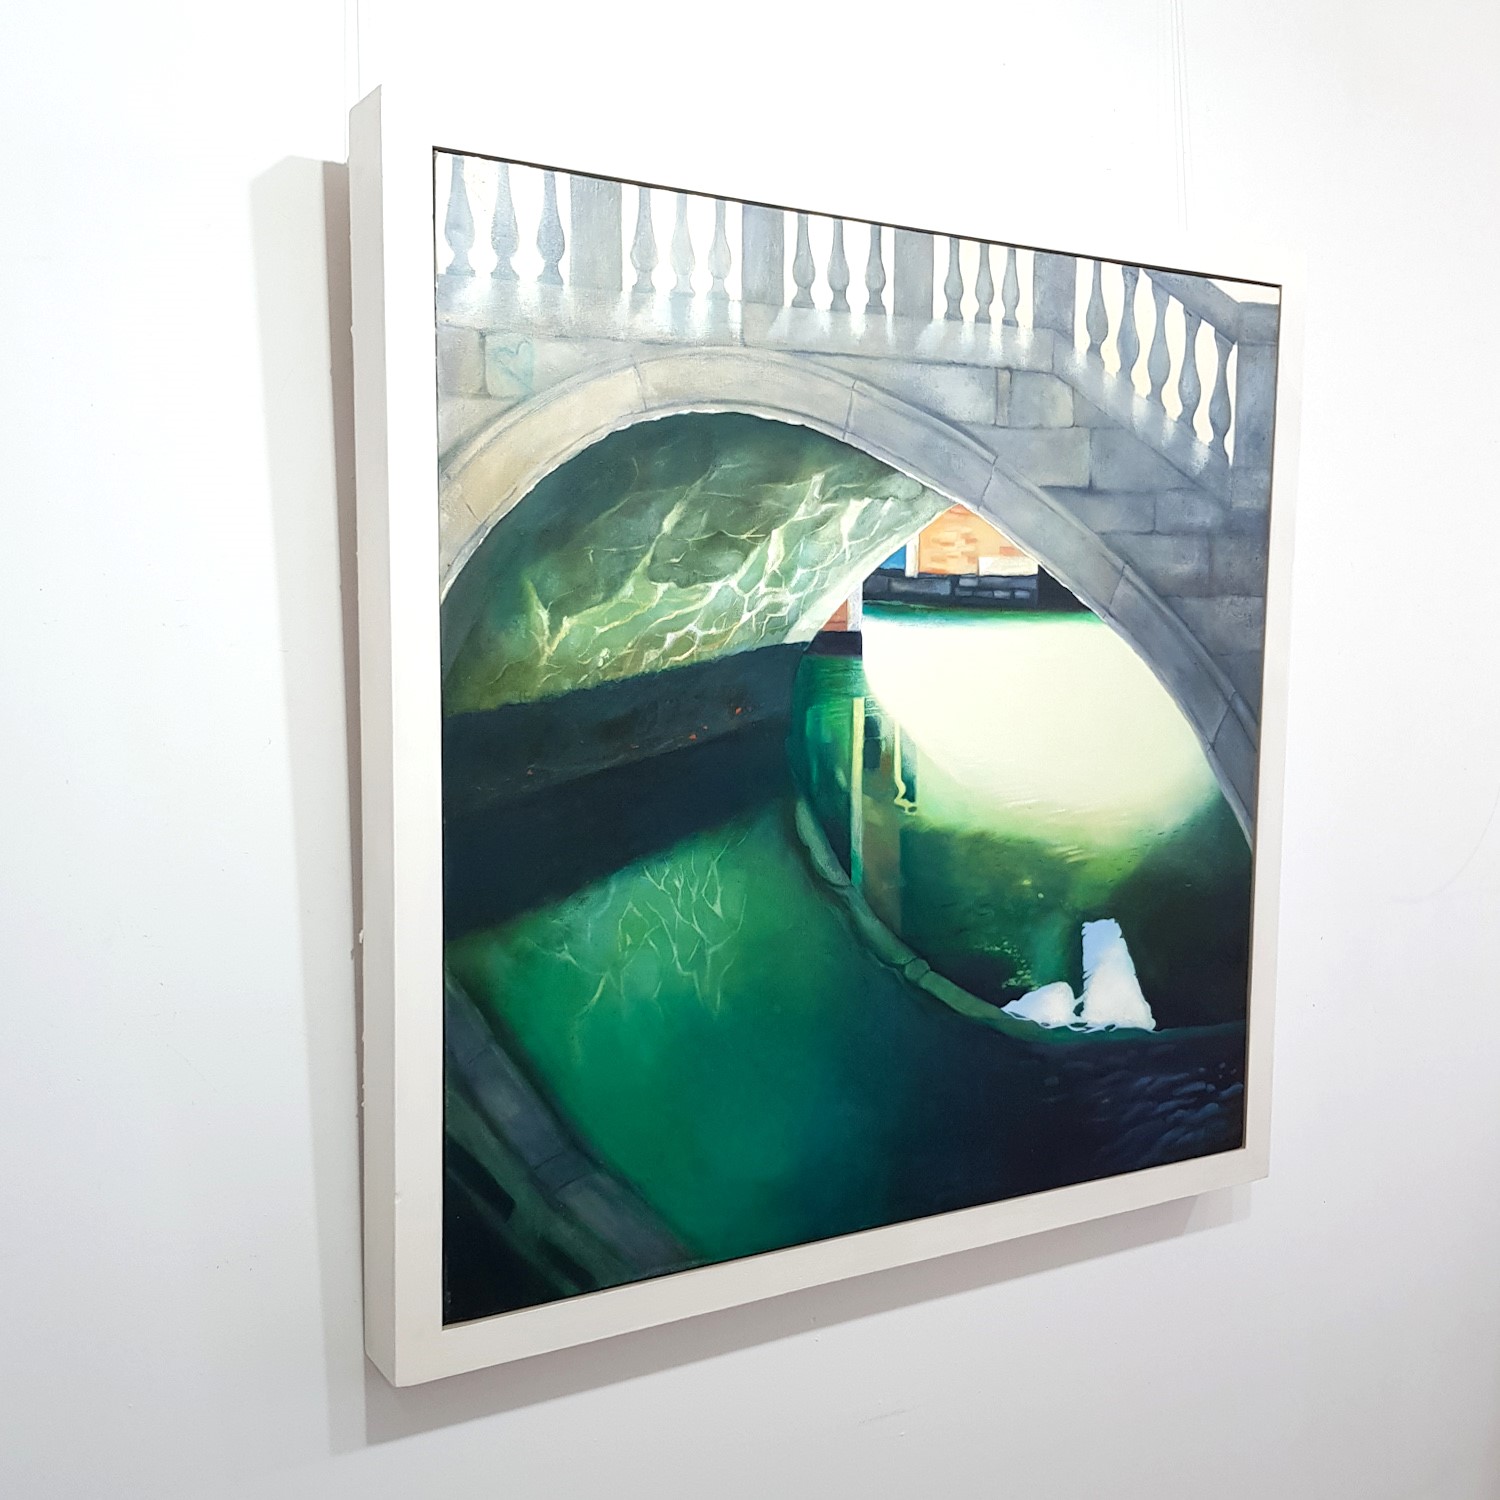 'The Bridge' by artist Lesley Banks